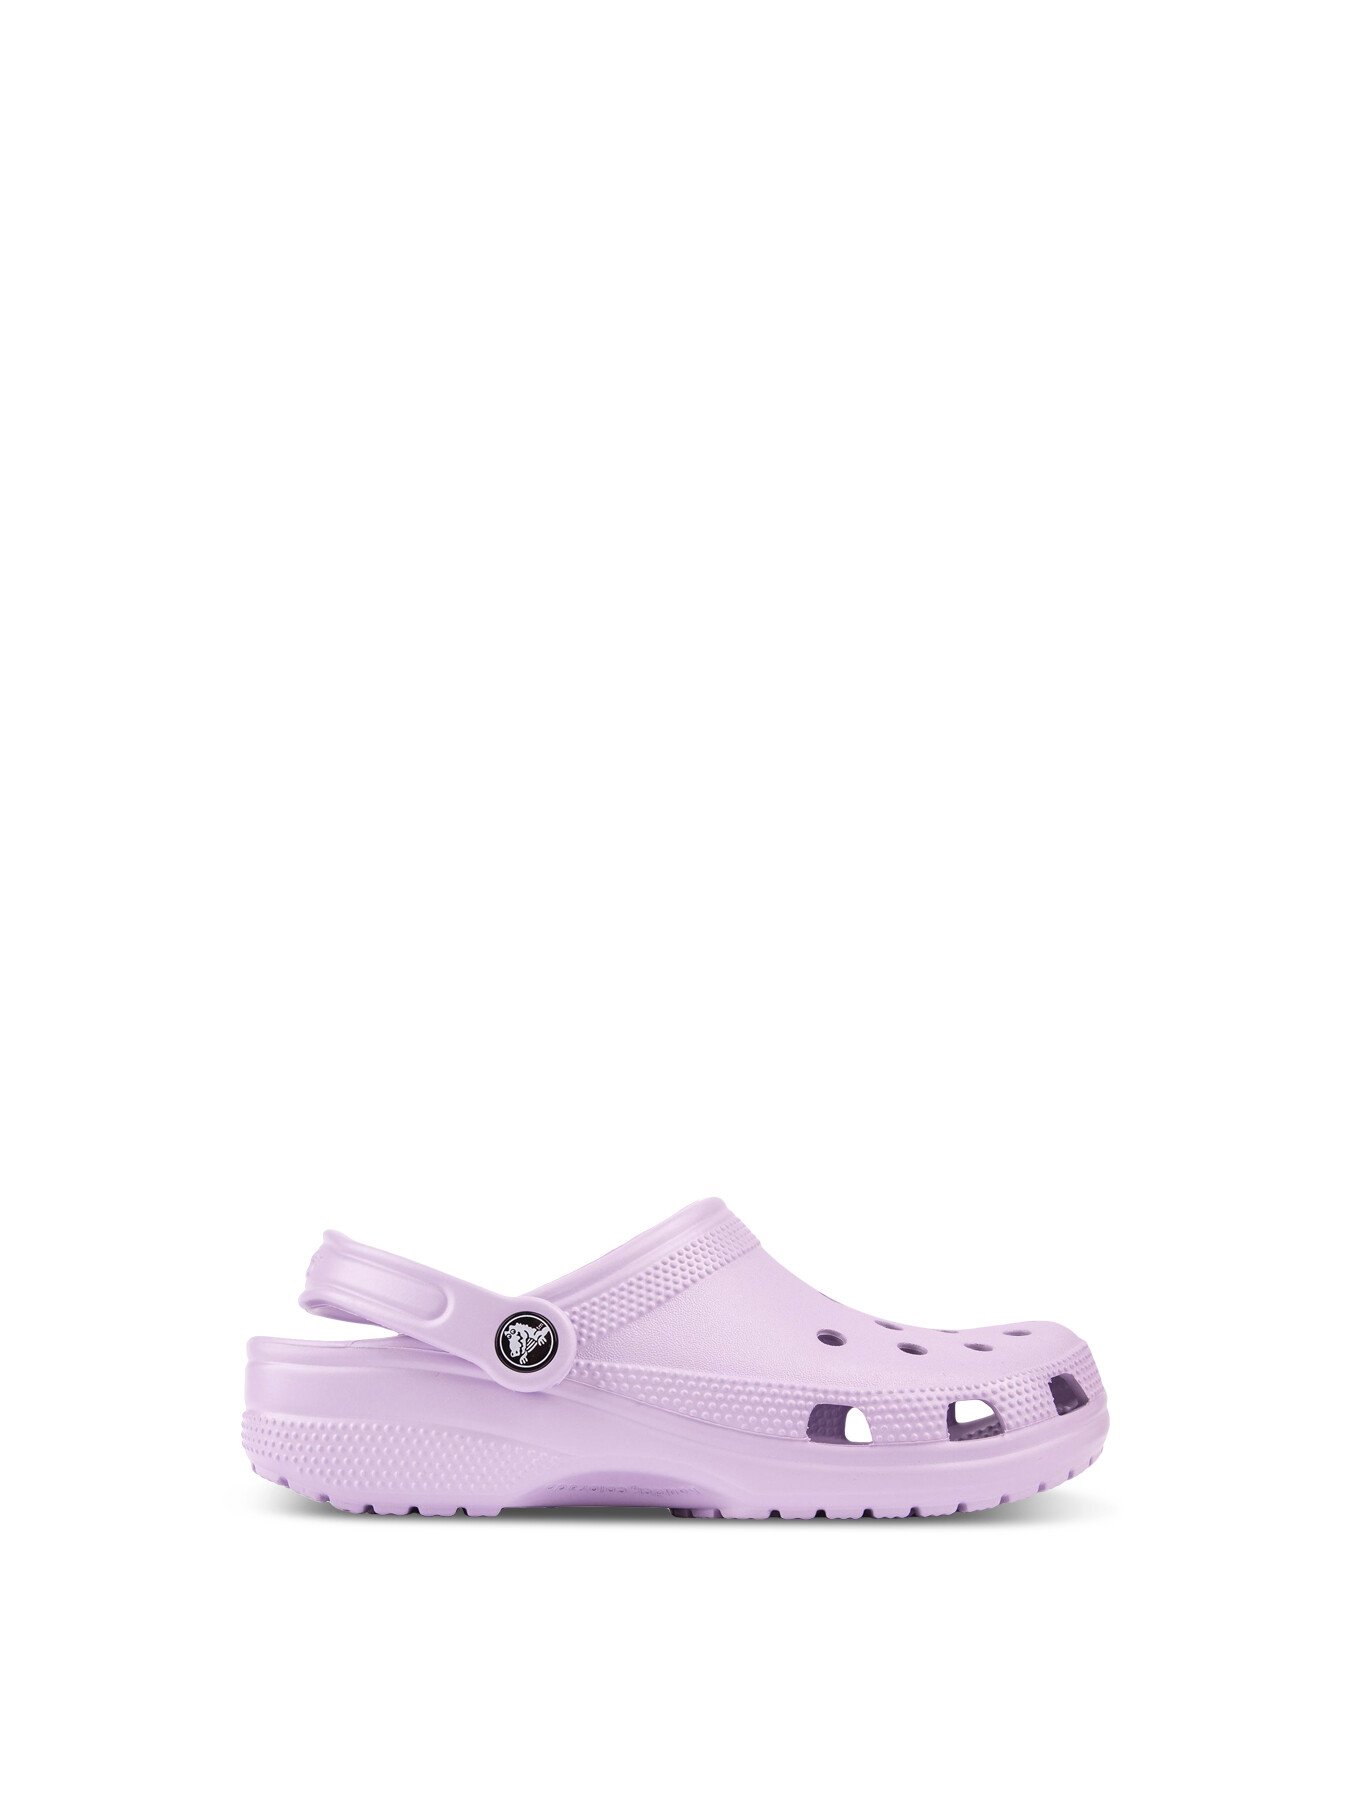 Crocs Women's  Classic Sandals